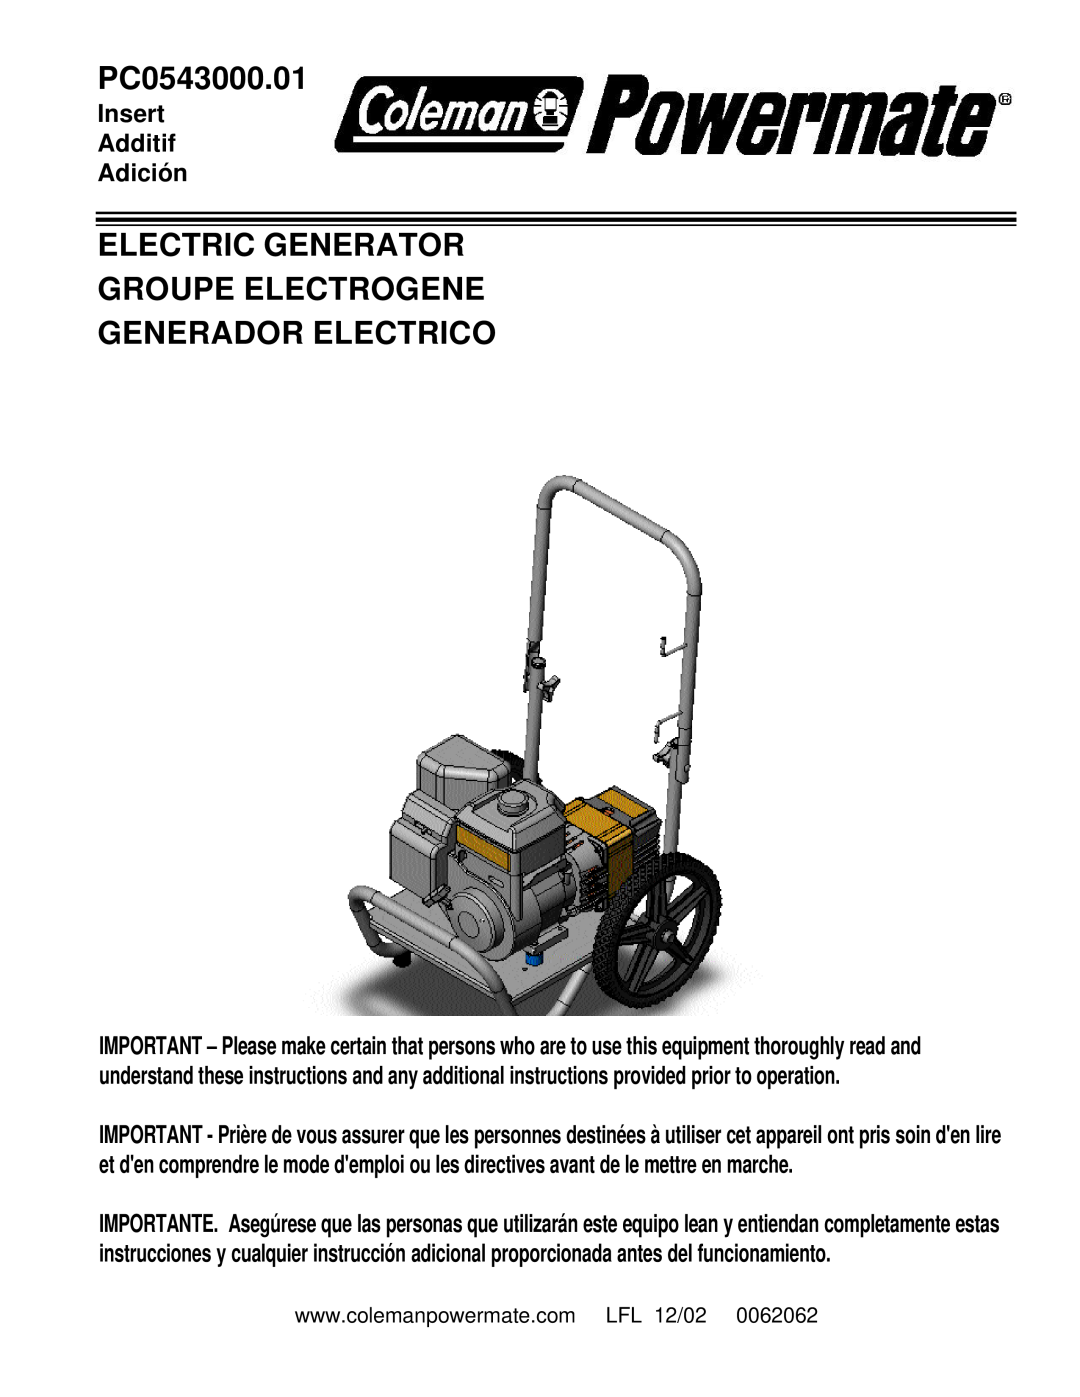 Powermate PC0543000.01 manual Electric Generator Groupe Electrogene, Generador Electrico, Insert Additif Adición 